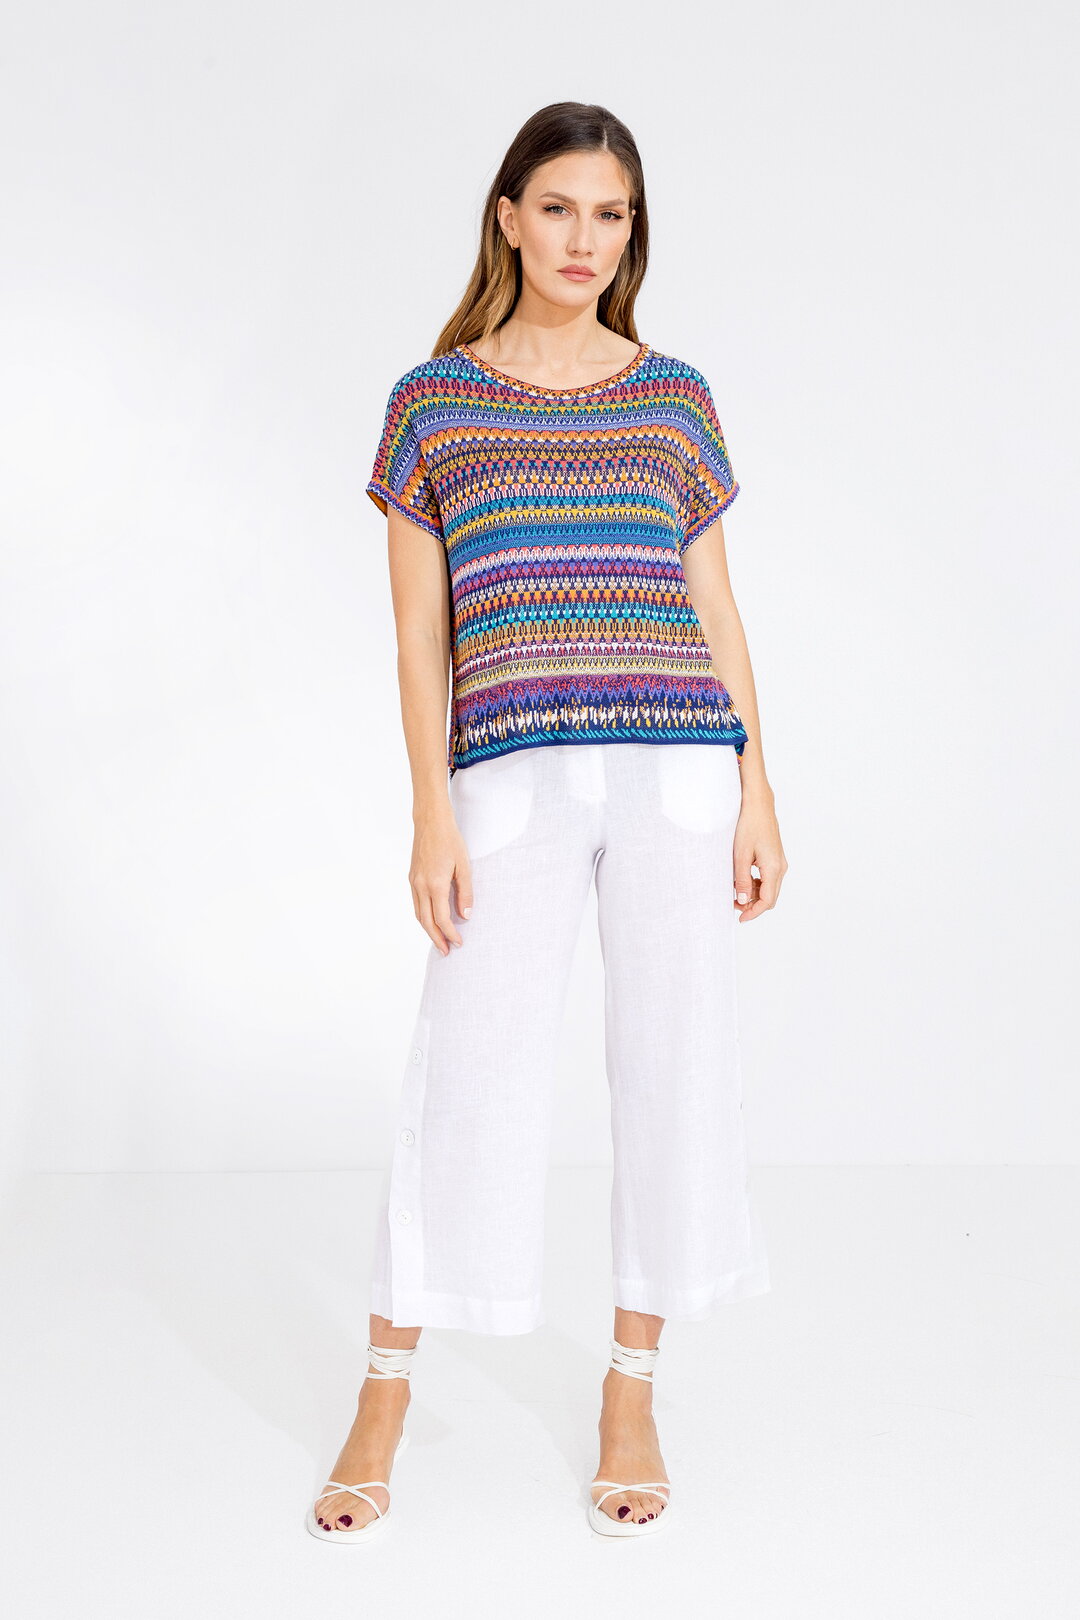 Sleeveless Pullover, Stripe Pattern